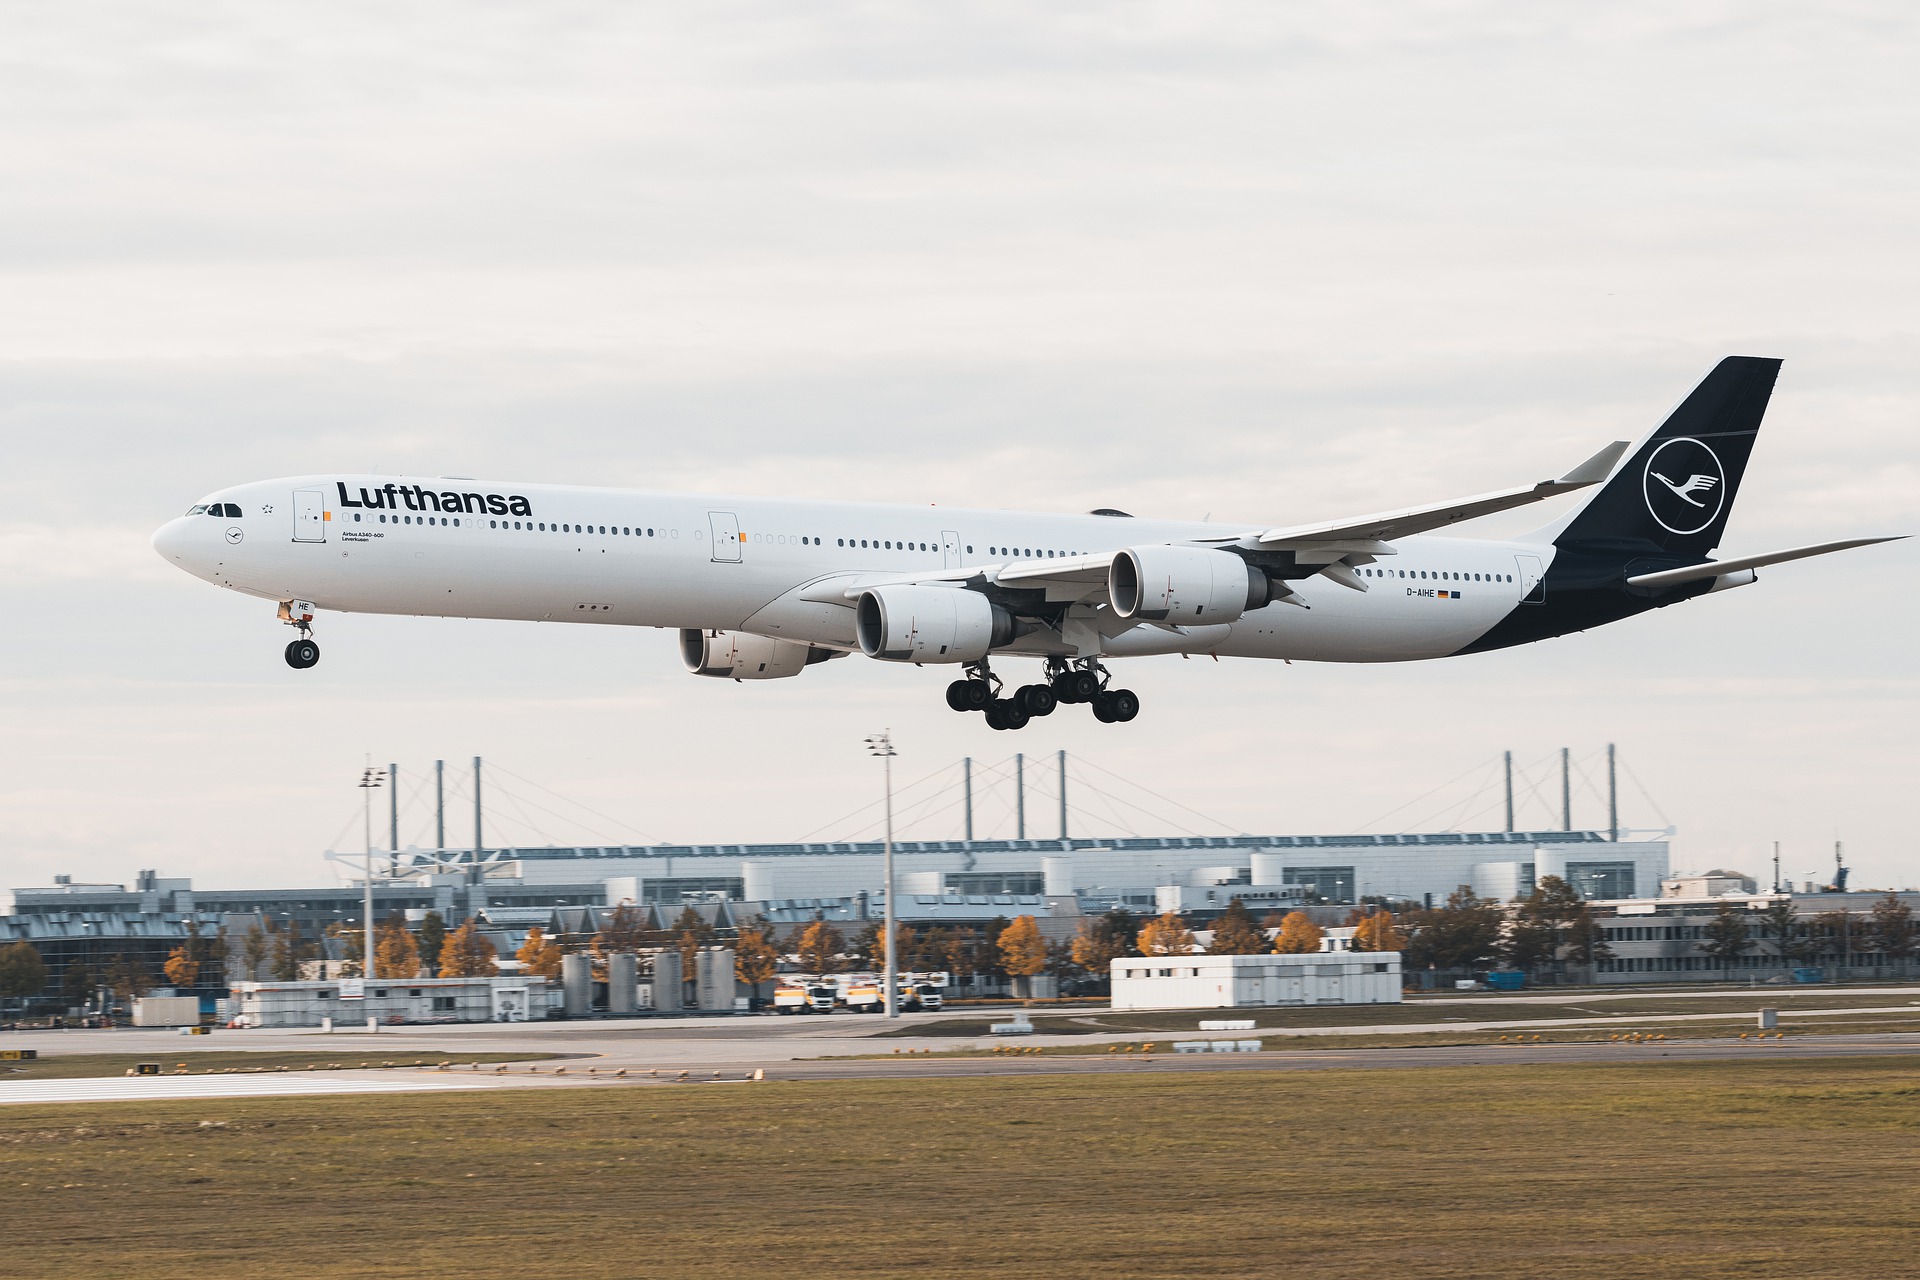 A Lufthansa A340 moments before landing